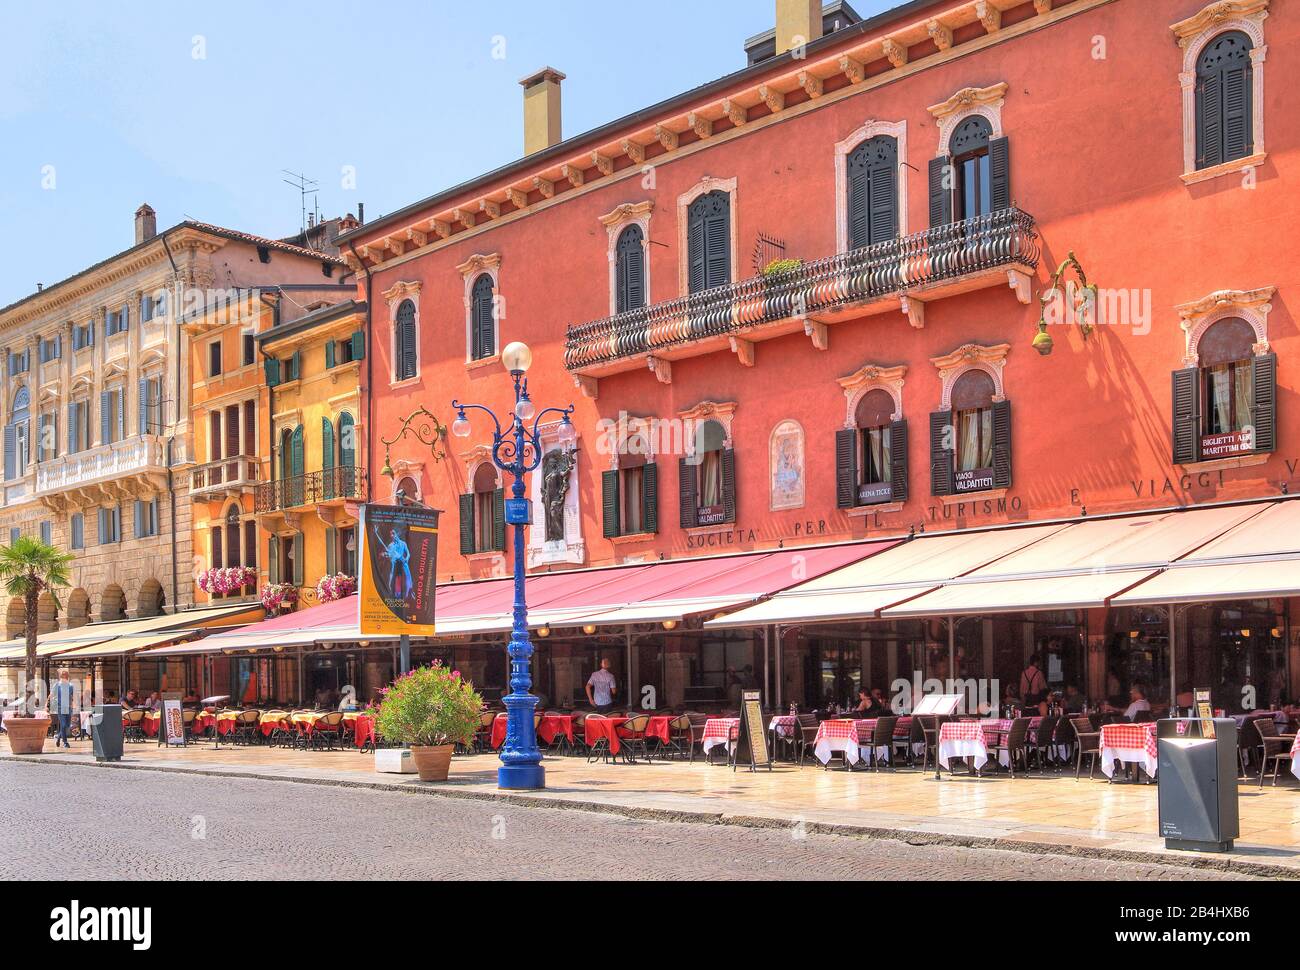 Palazzi in Piazza Bra with restaurant terraces, Old Town, Verona, Veneto, Italy Stock Photo